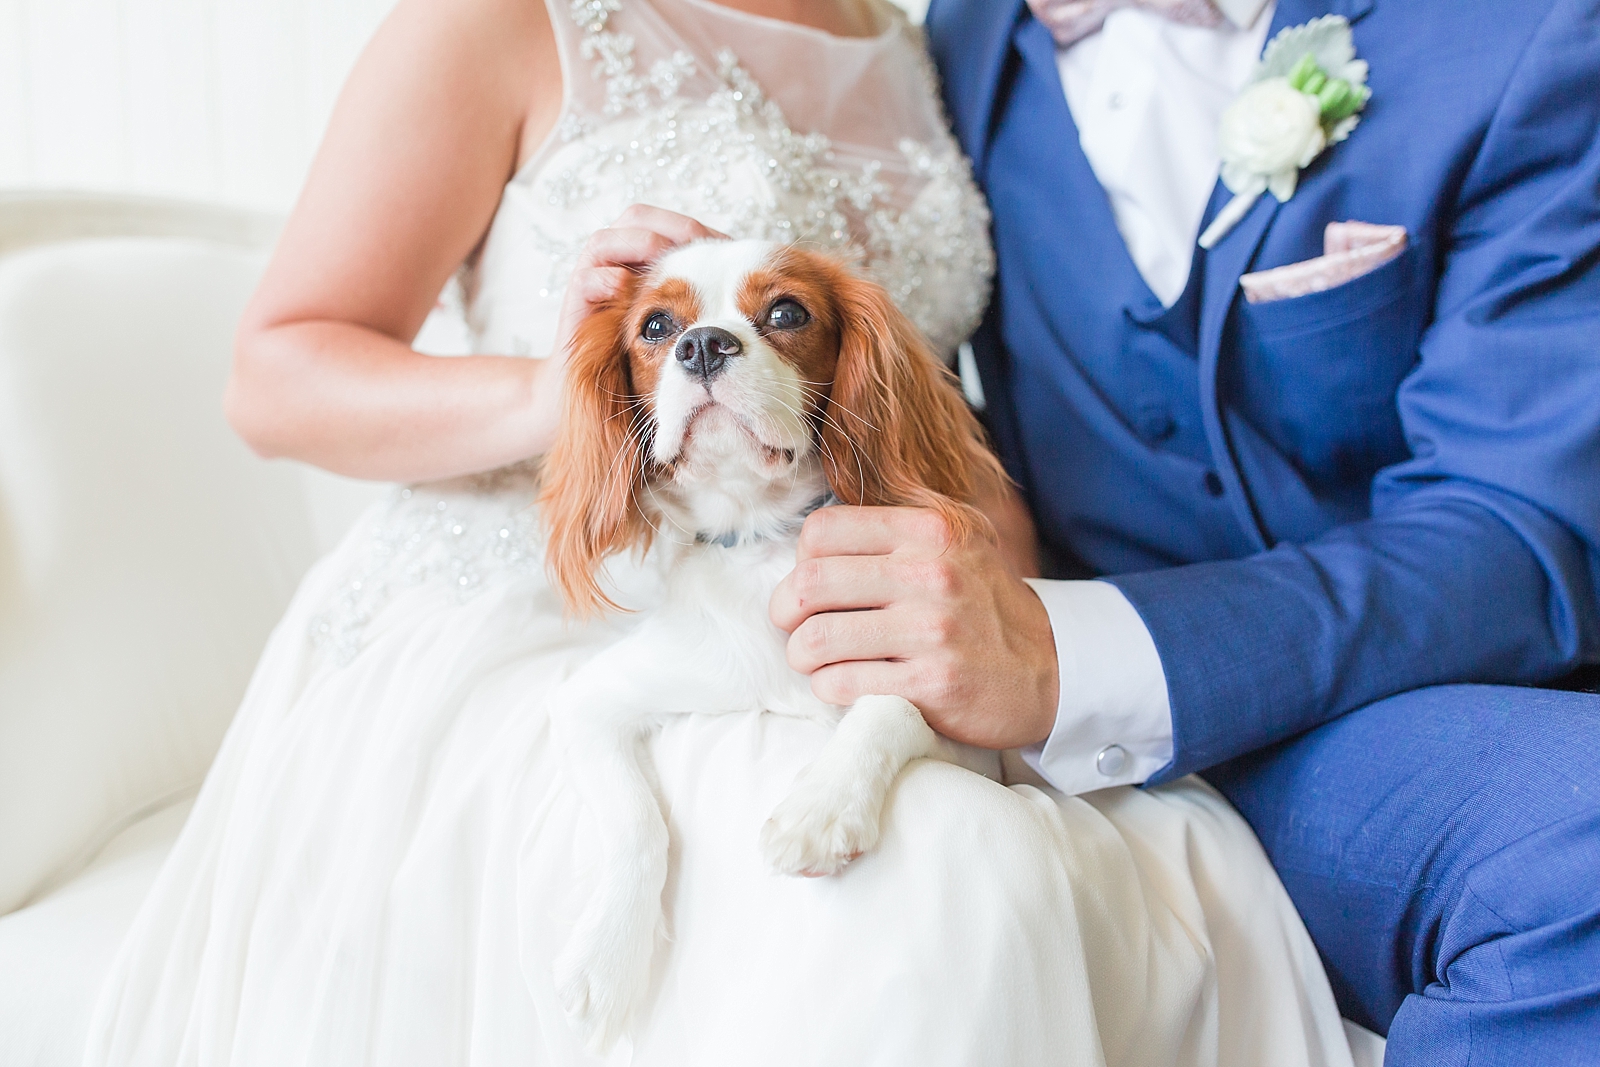 Atlanta Georgia Wedding Bride and Groom with Puppy on lap Photo